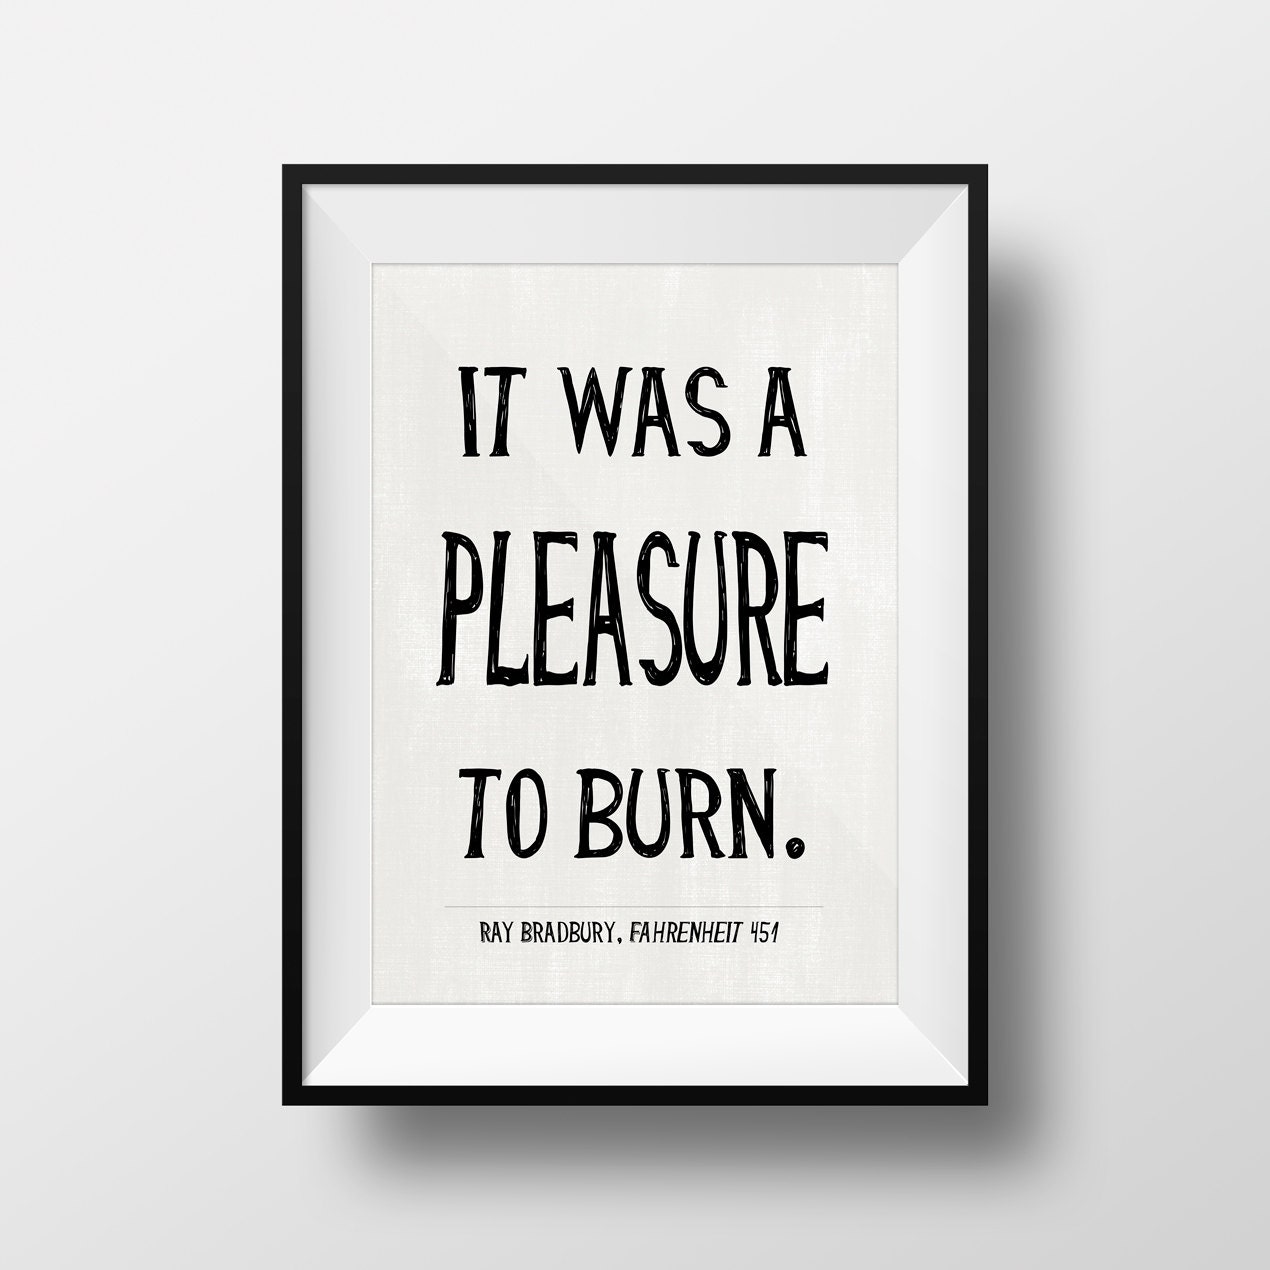 Ray Bradbury quote Fahrenheit 451 quote Literary quote print